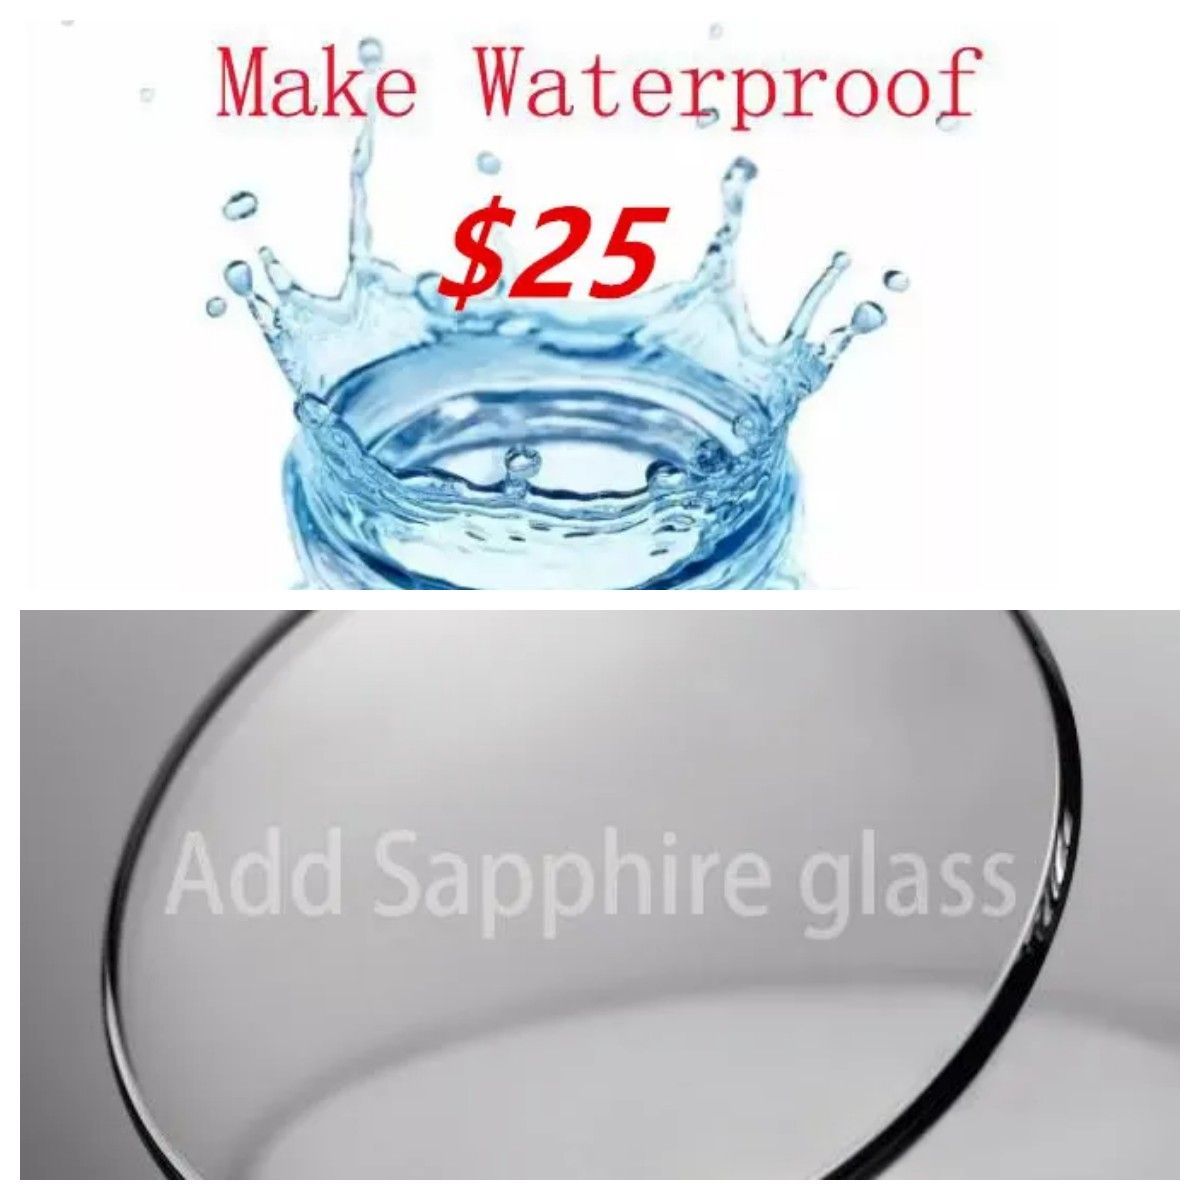 Sapphire glass+Waterproof